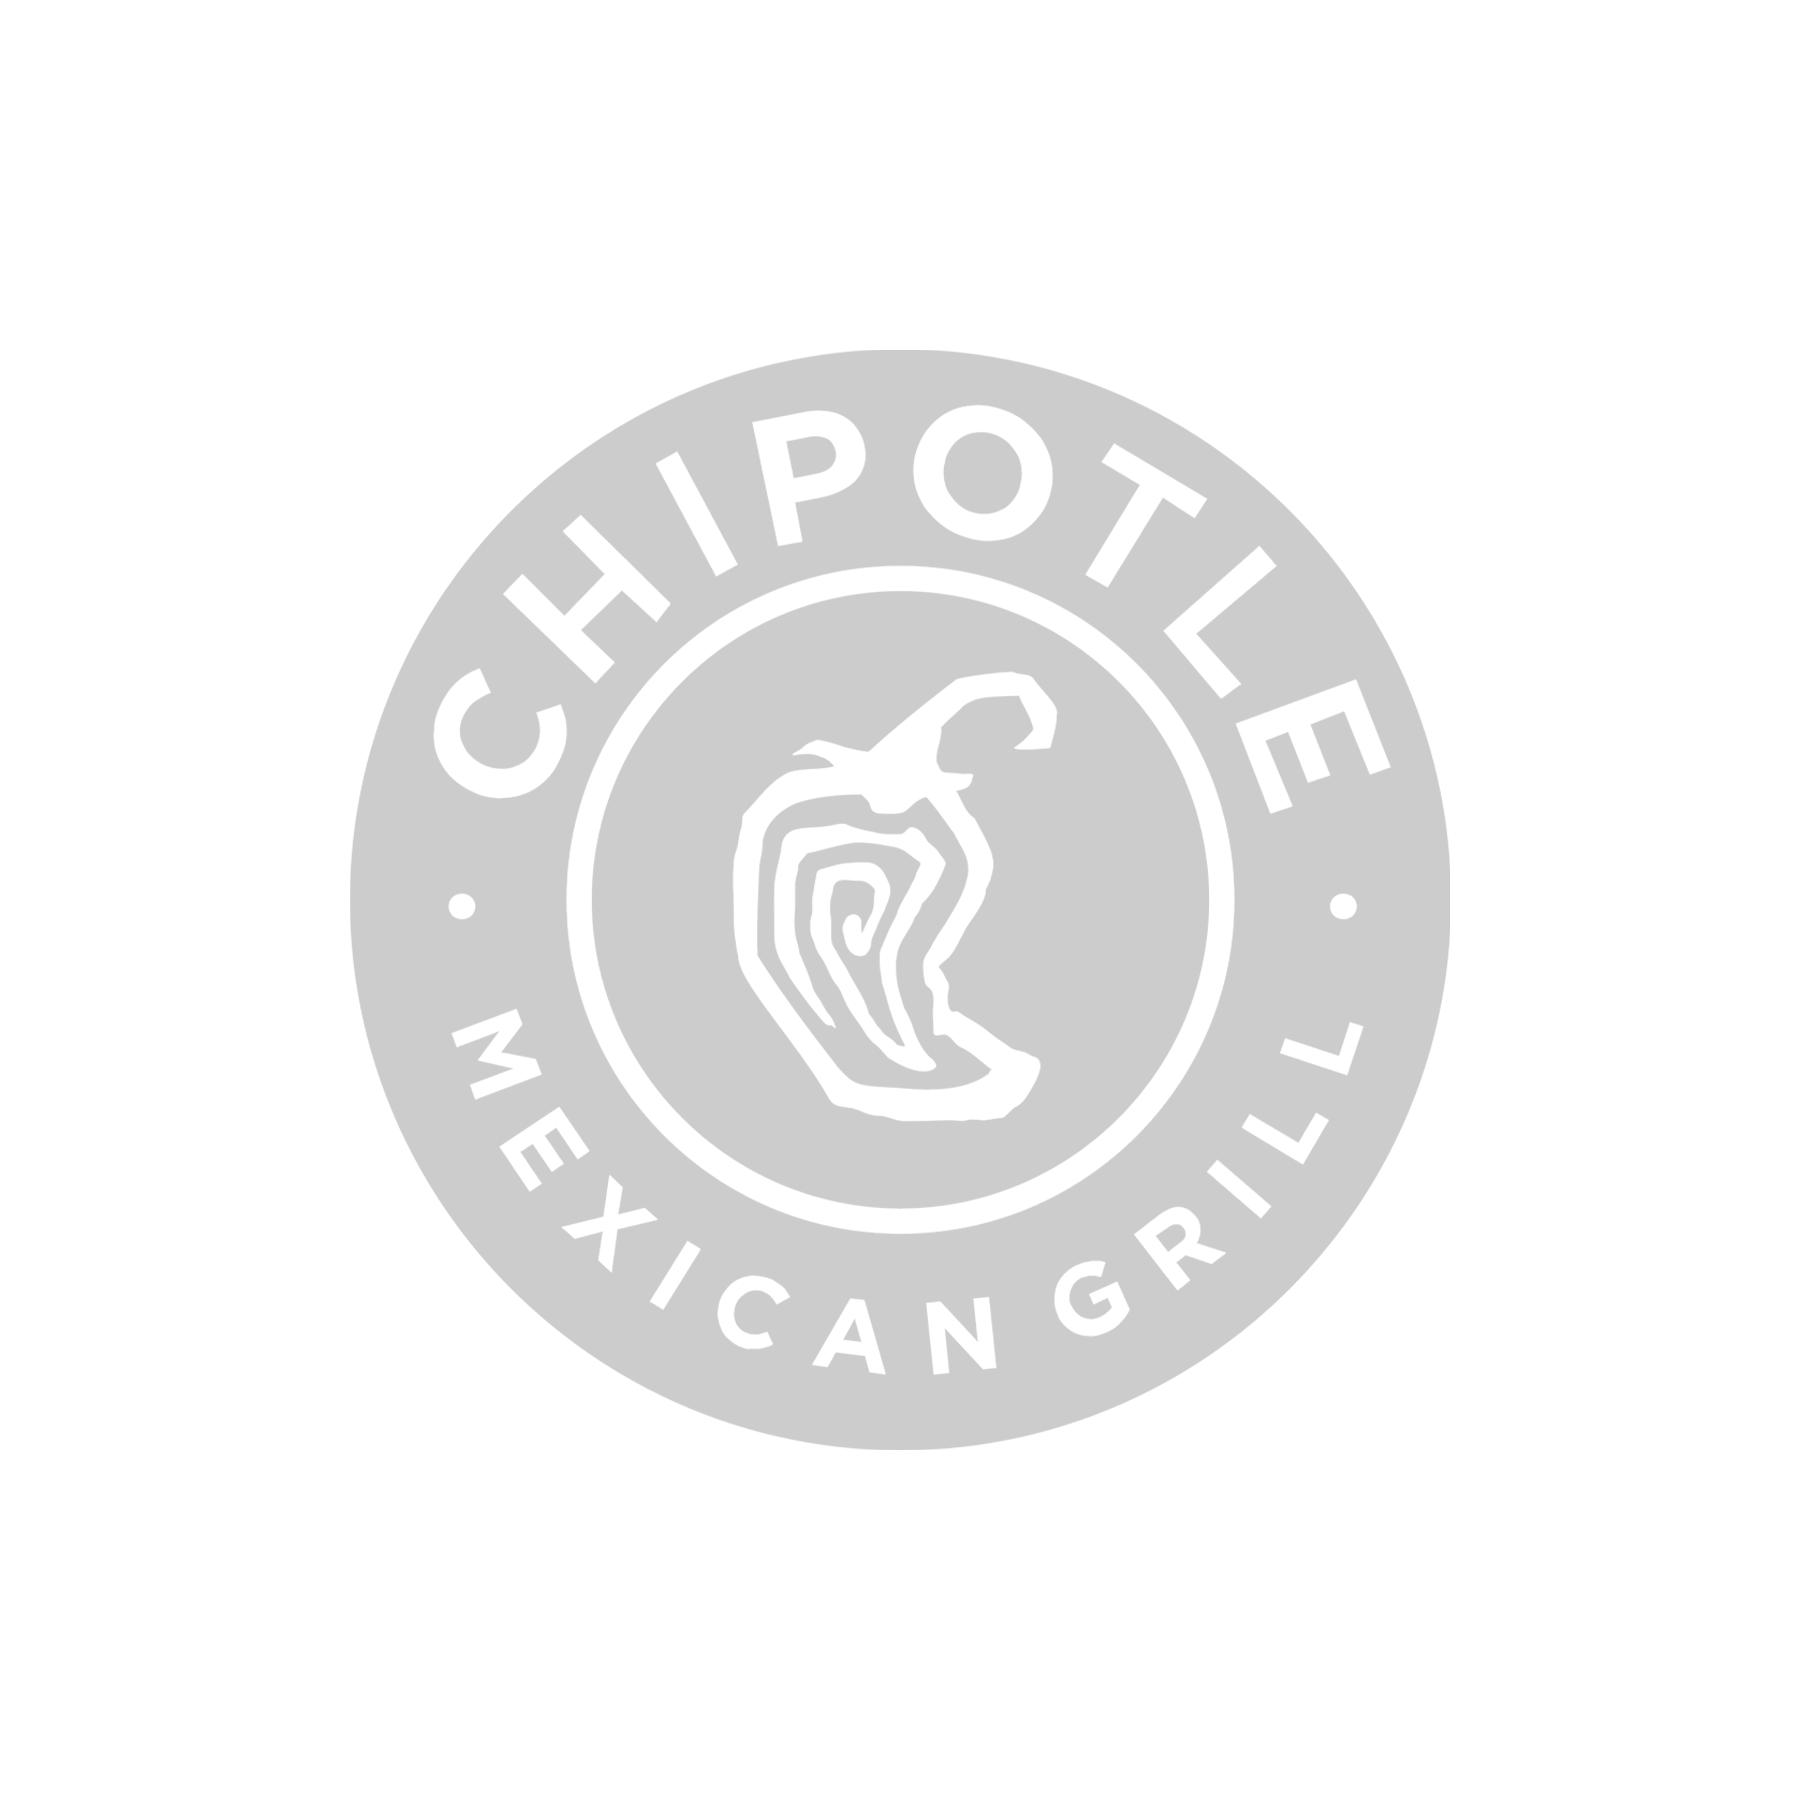 Chipotle Logo